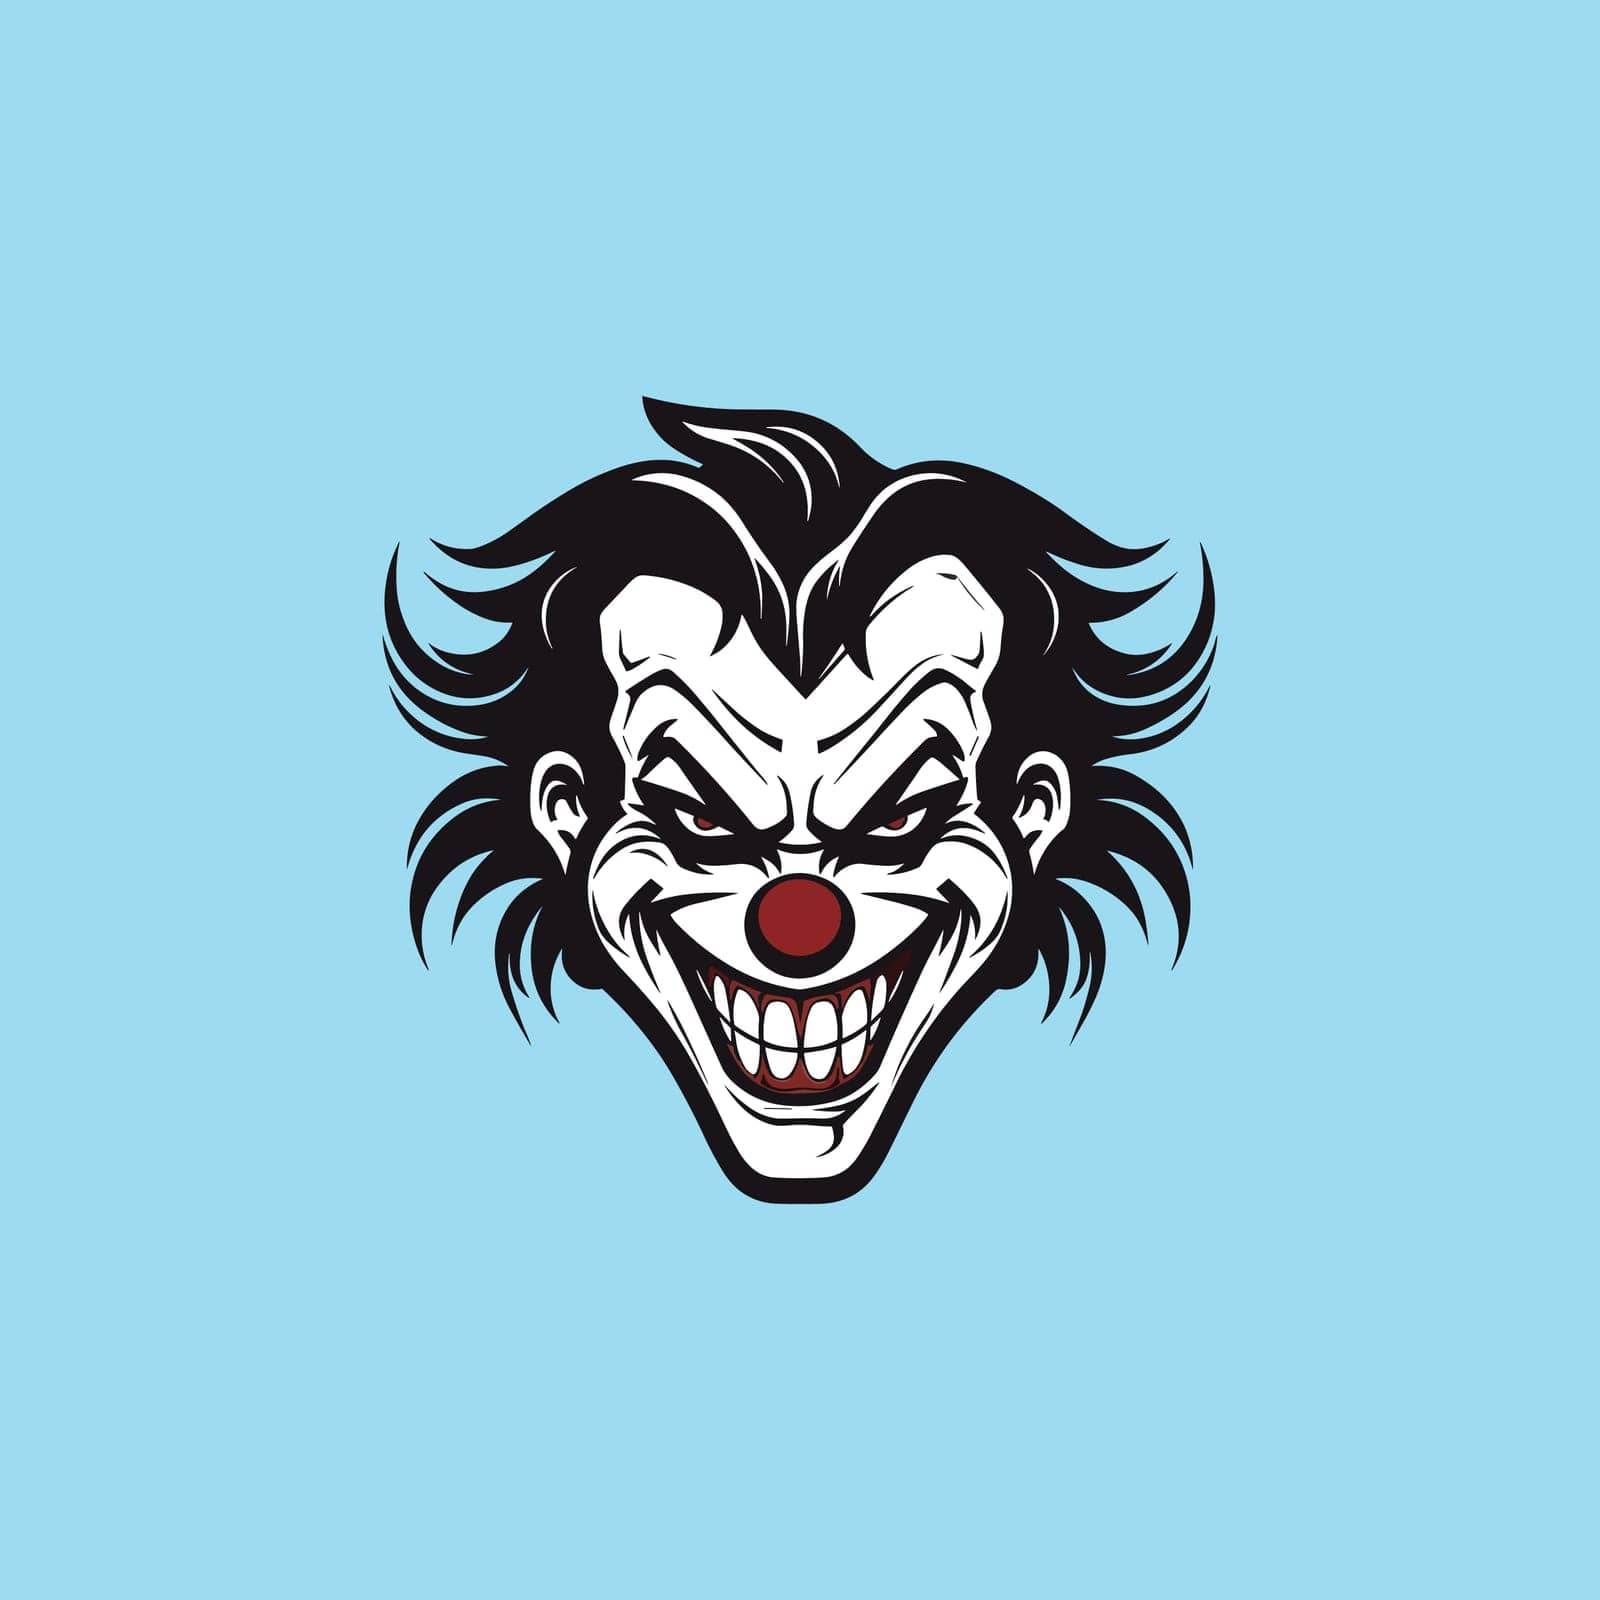 horror joker face with black hair vector by Vinhsino